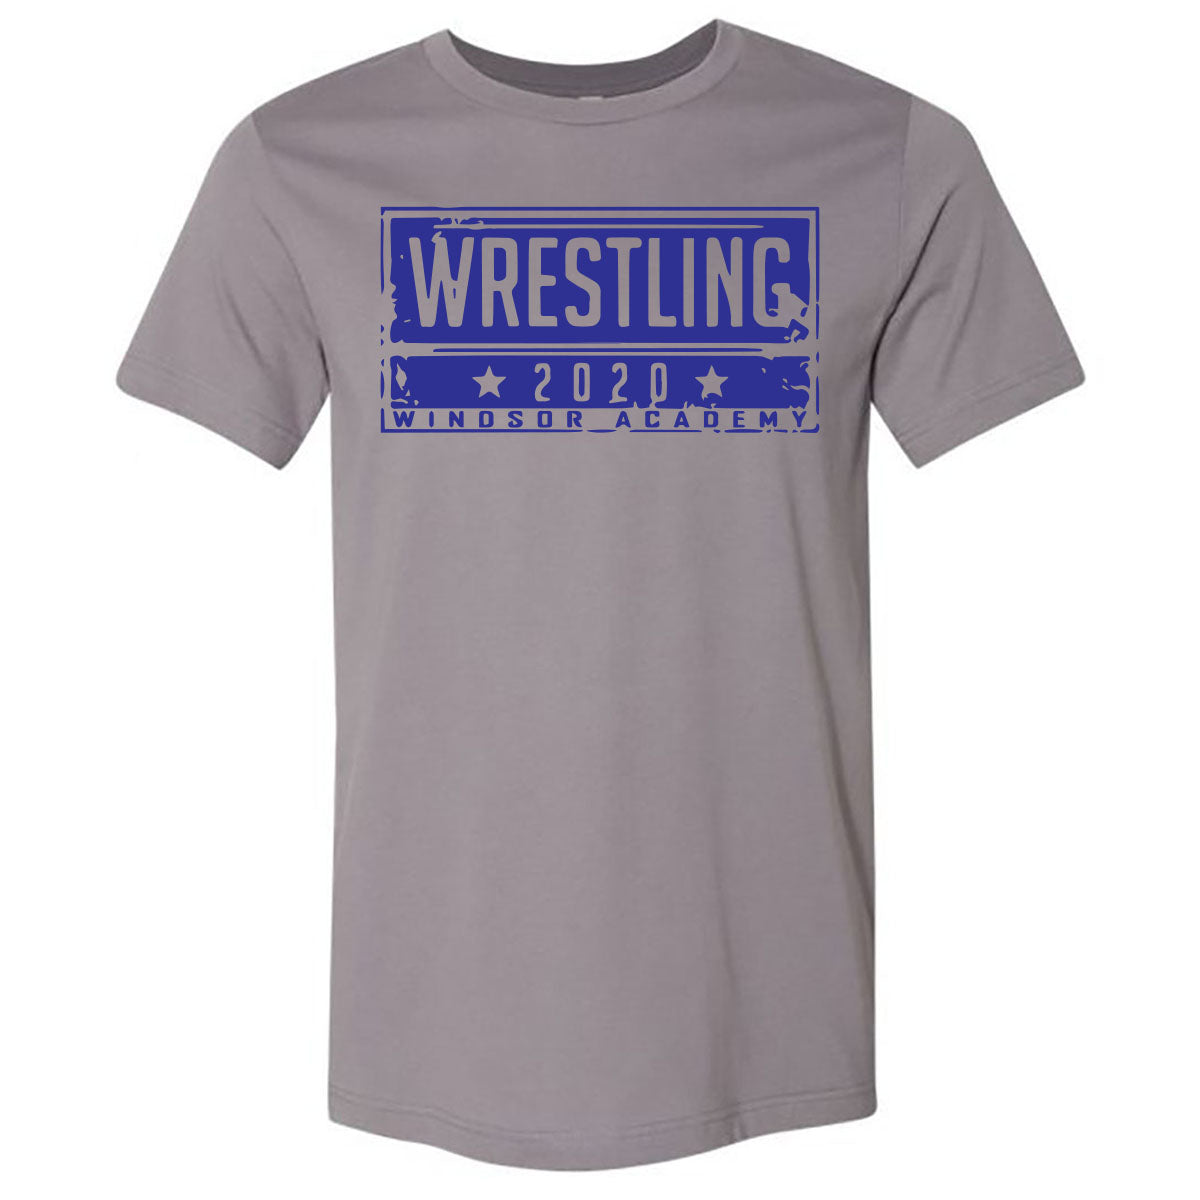 Windsor - Wrestling 2020 Windsor Academy - Storm (Tee/DriFit/Hoodie/Sweatshirt) - Southern Grace Creations